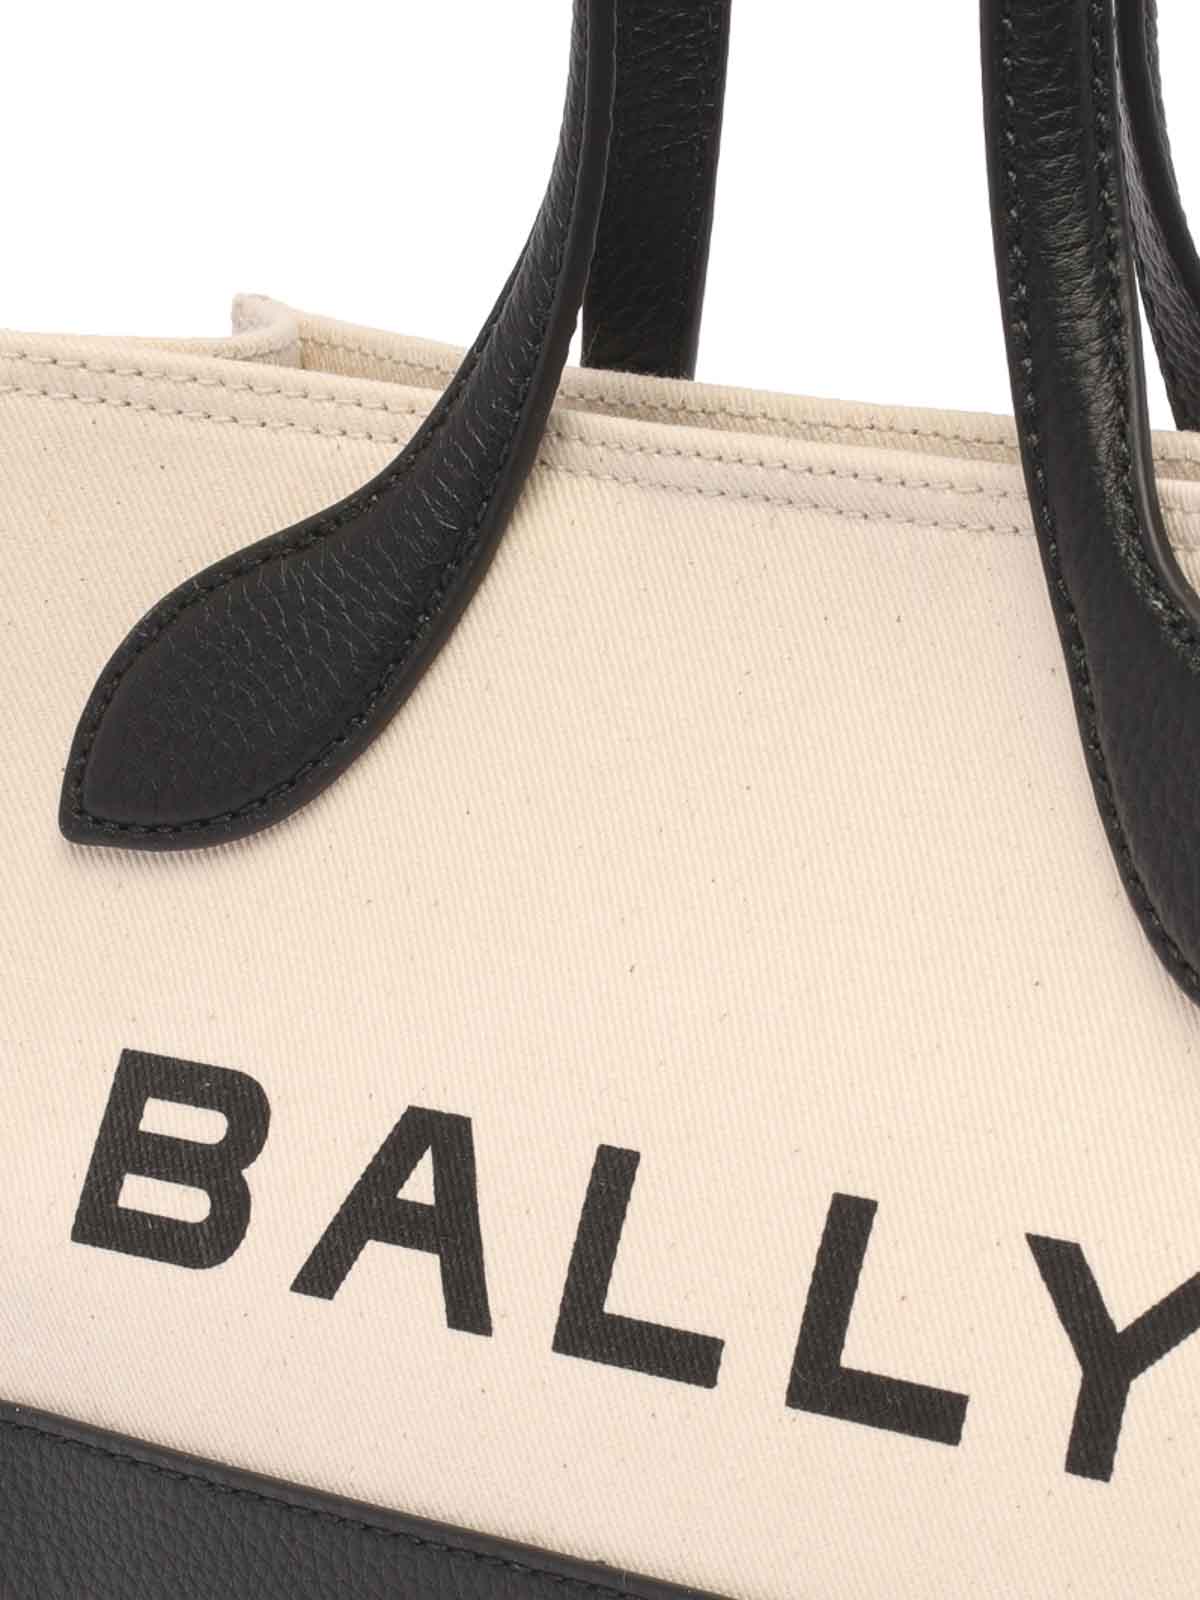 Shop Bally Logo Tote Bag In White